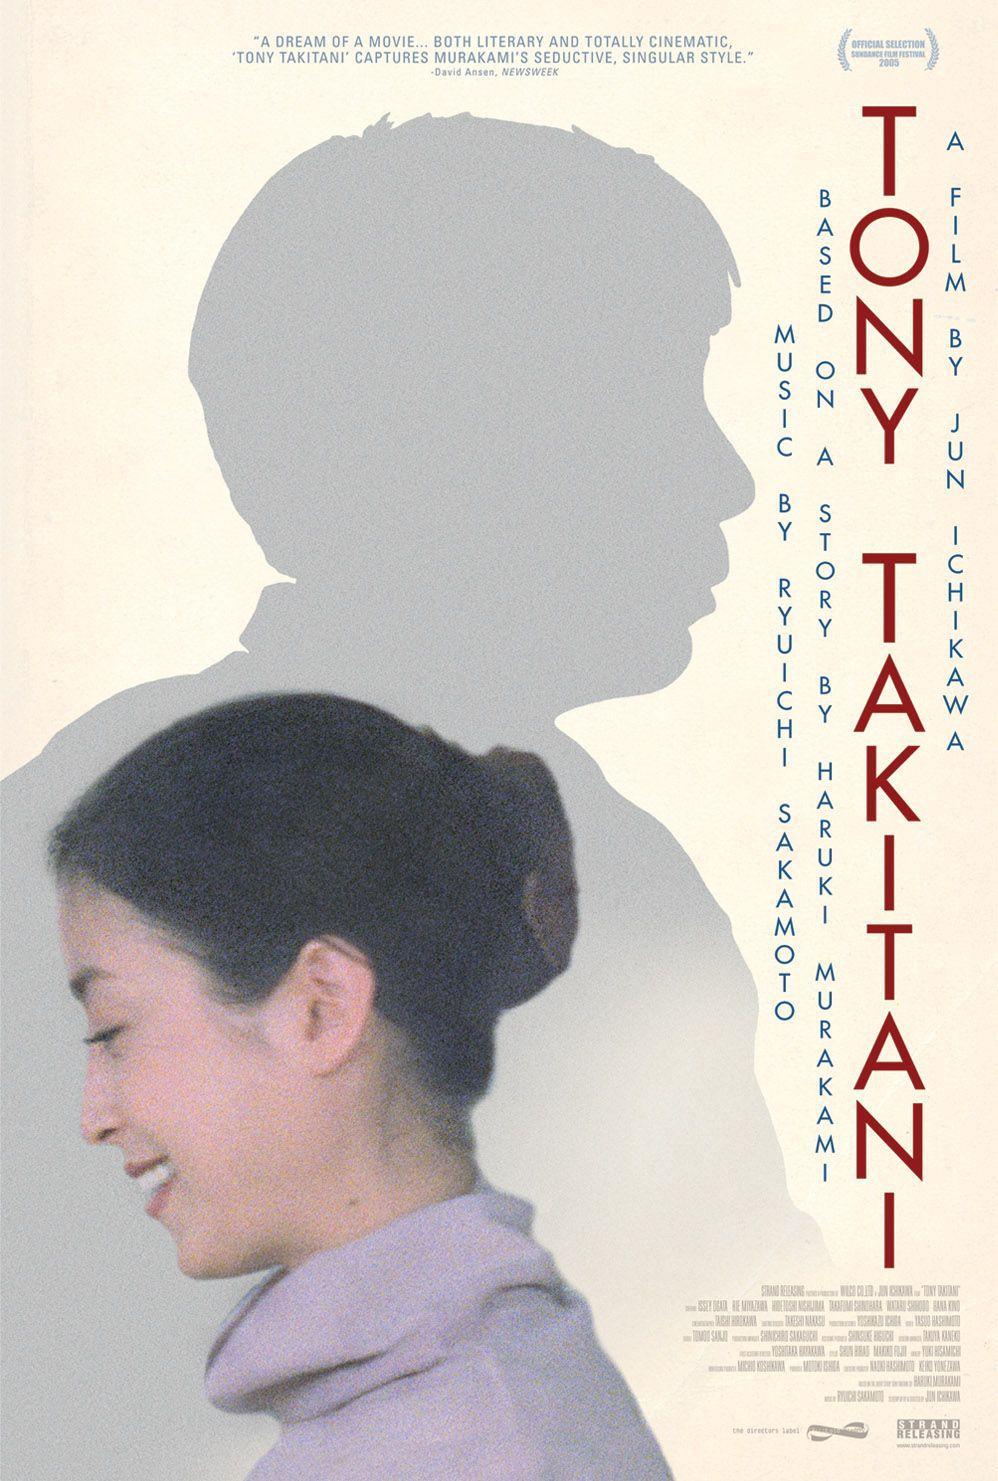 Постер фильма Тони Такитани | Tony Takitani